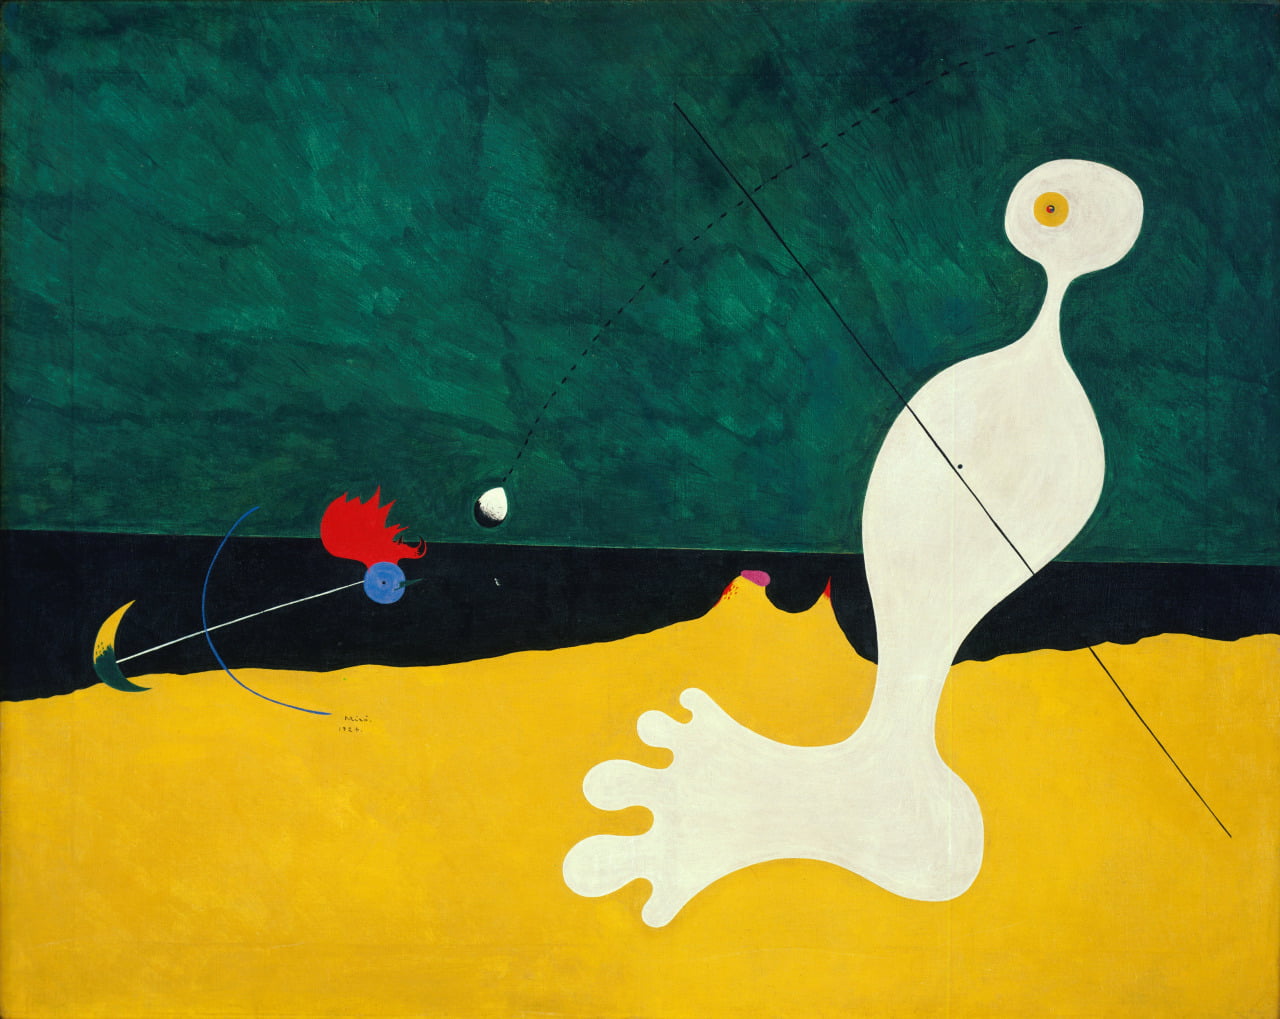 Miró - Person Throwing a Stone at a Bird